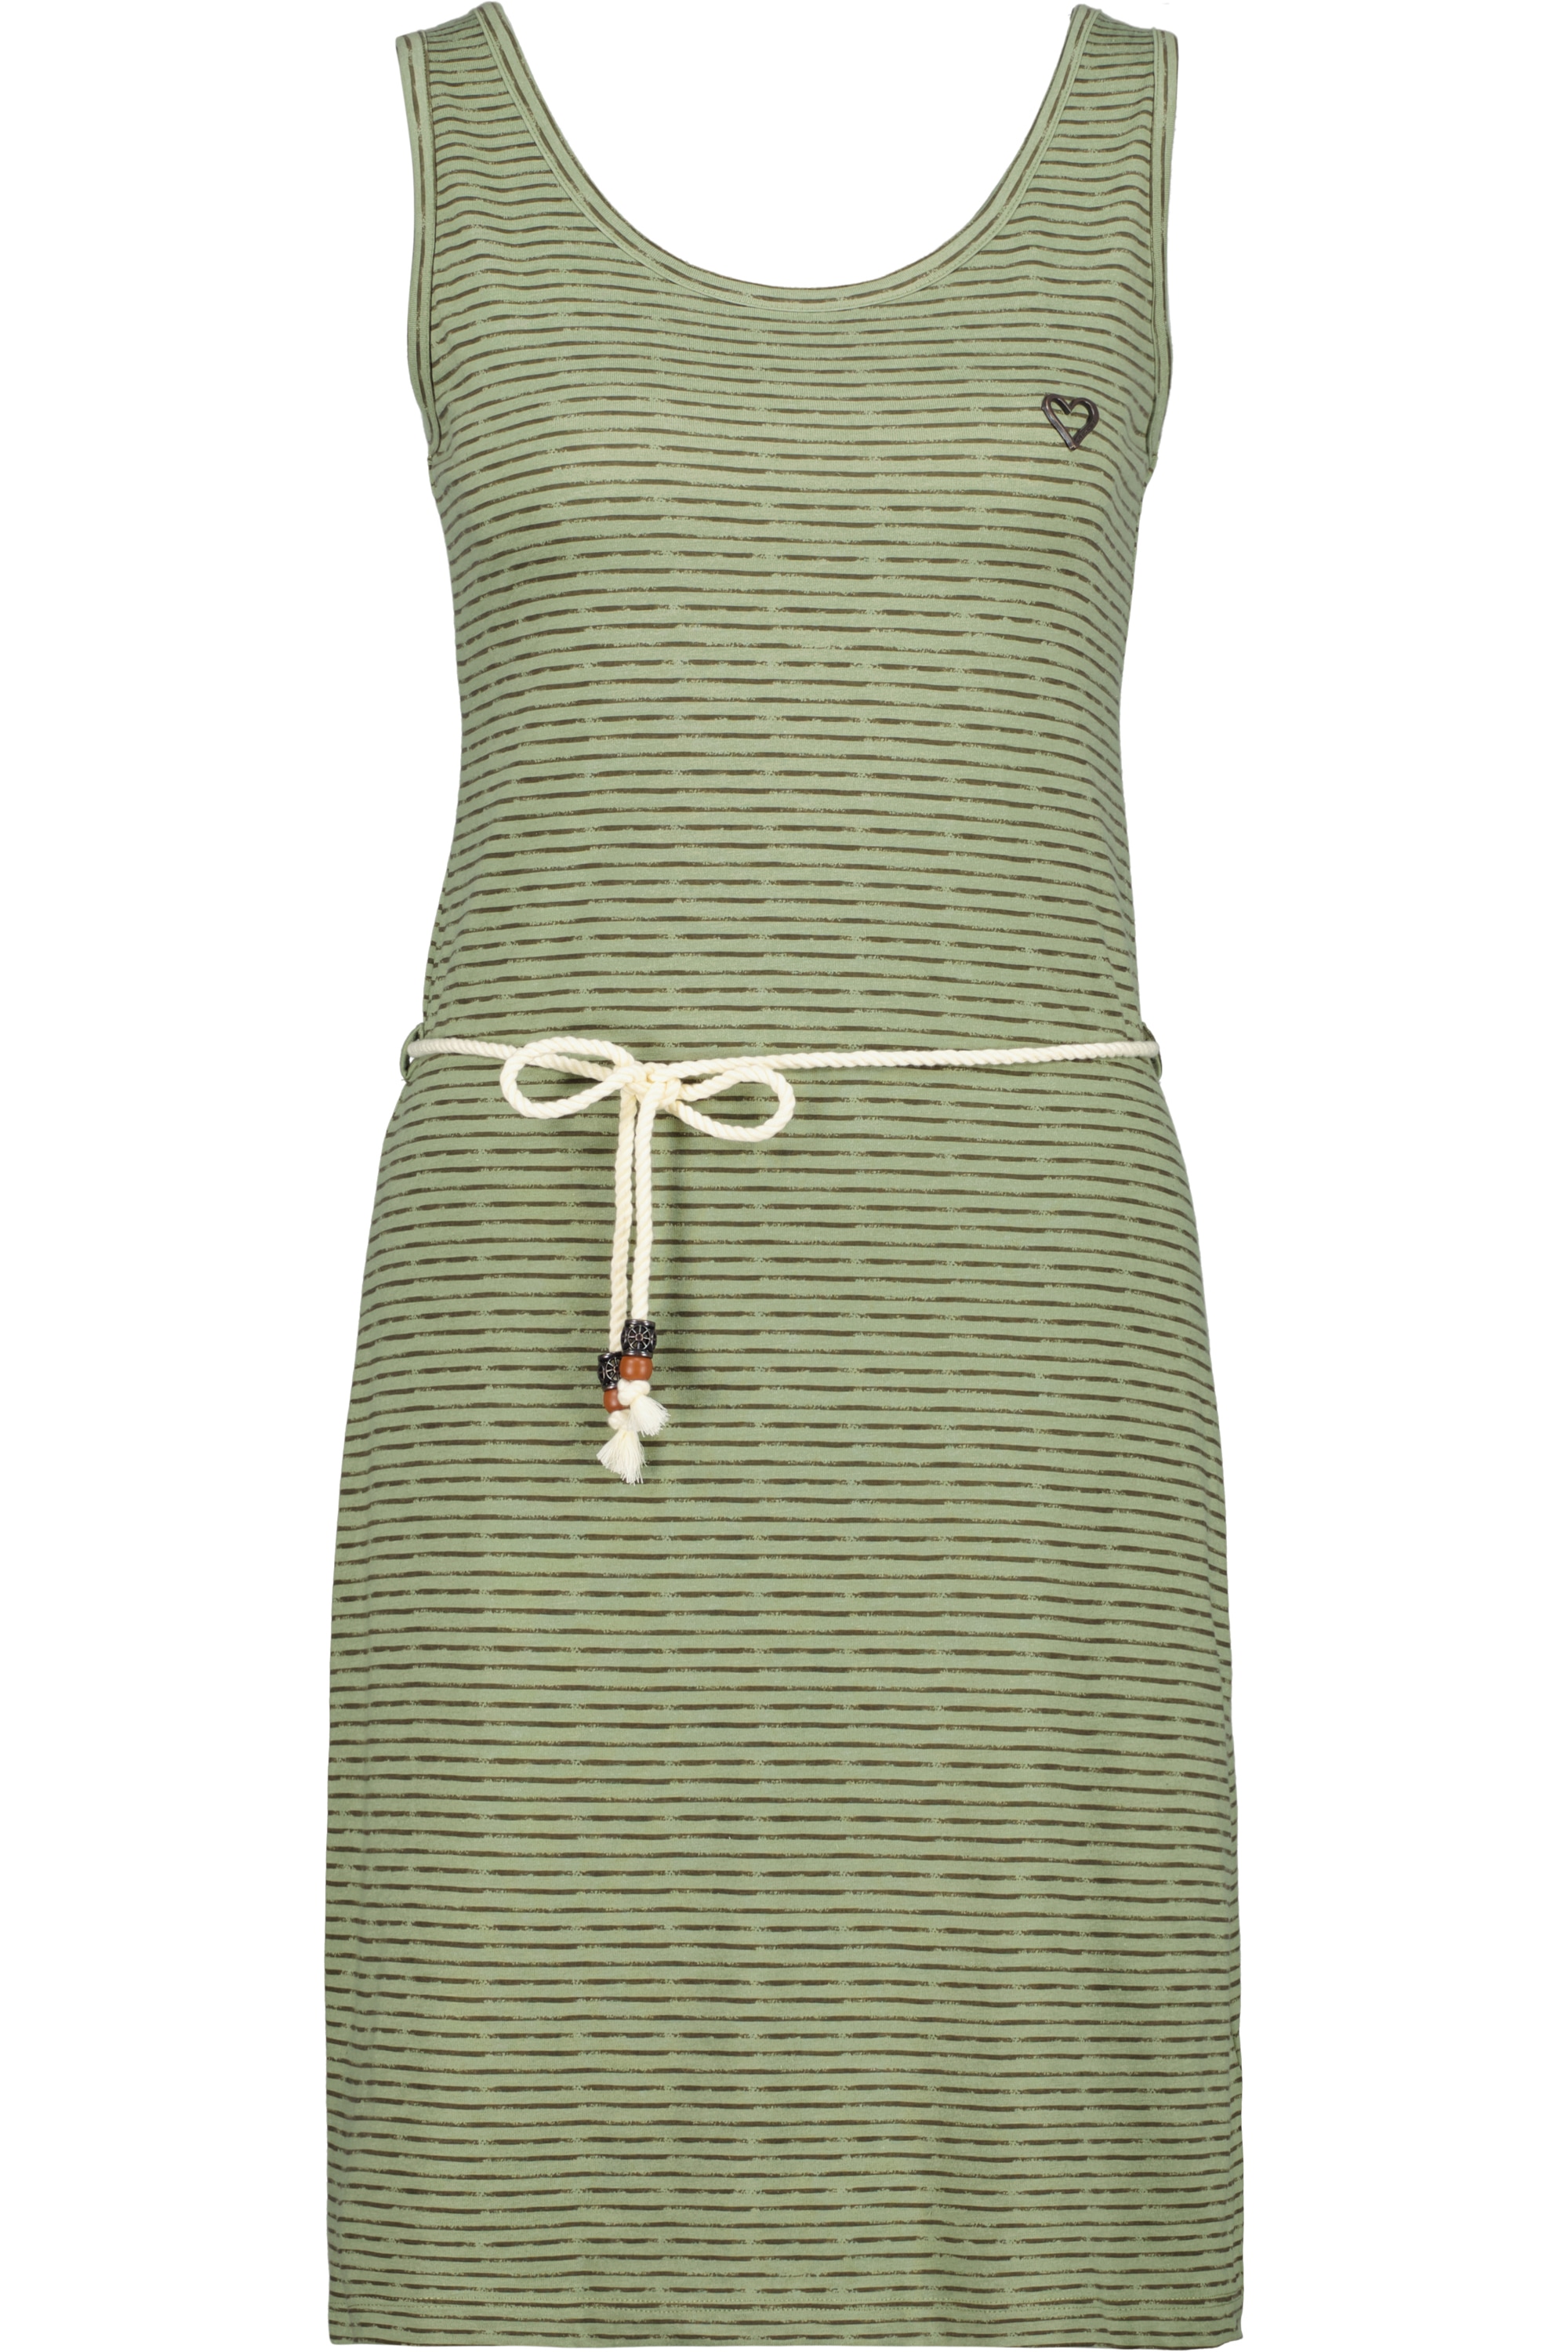 Alife & Kickin Sommerkleid Sommerkleid, Dress Z Sleeveless bestellen »JenniferAK Kleid« Damen